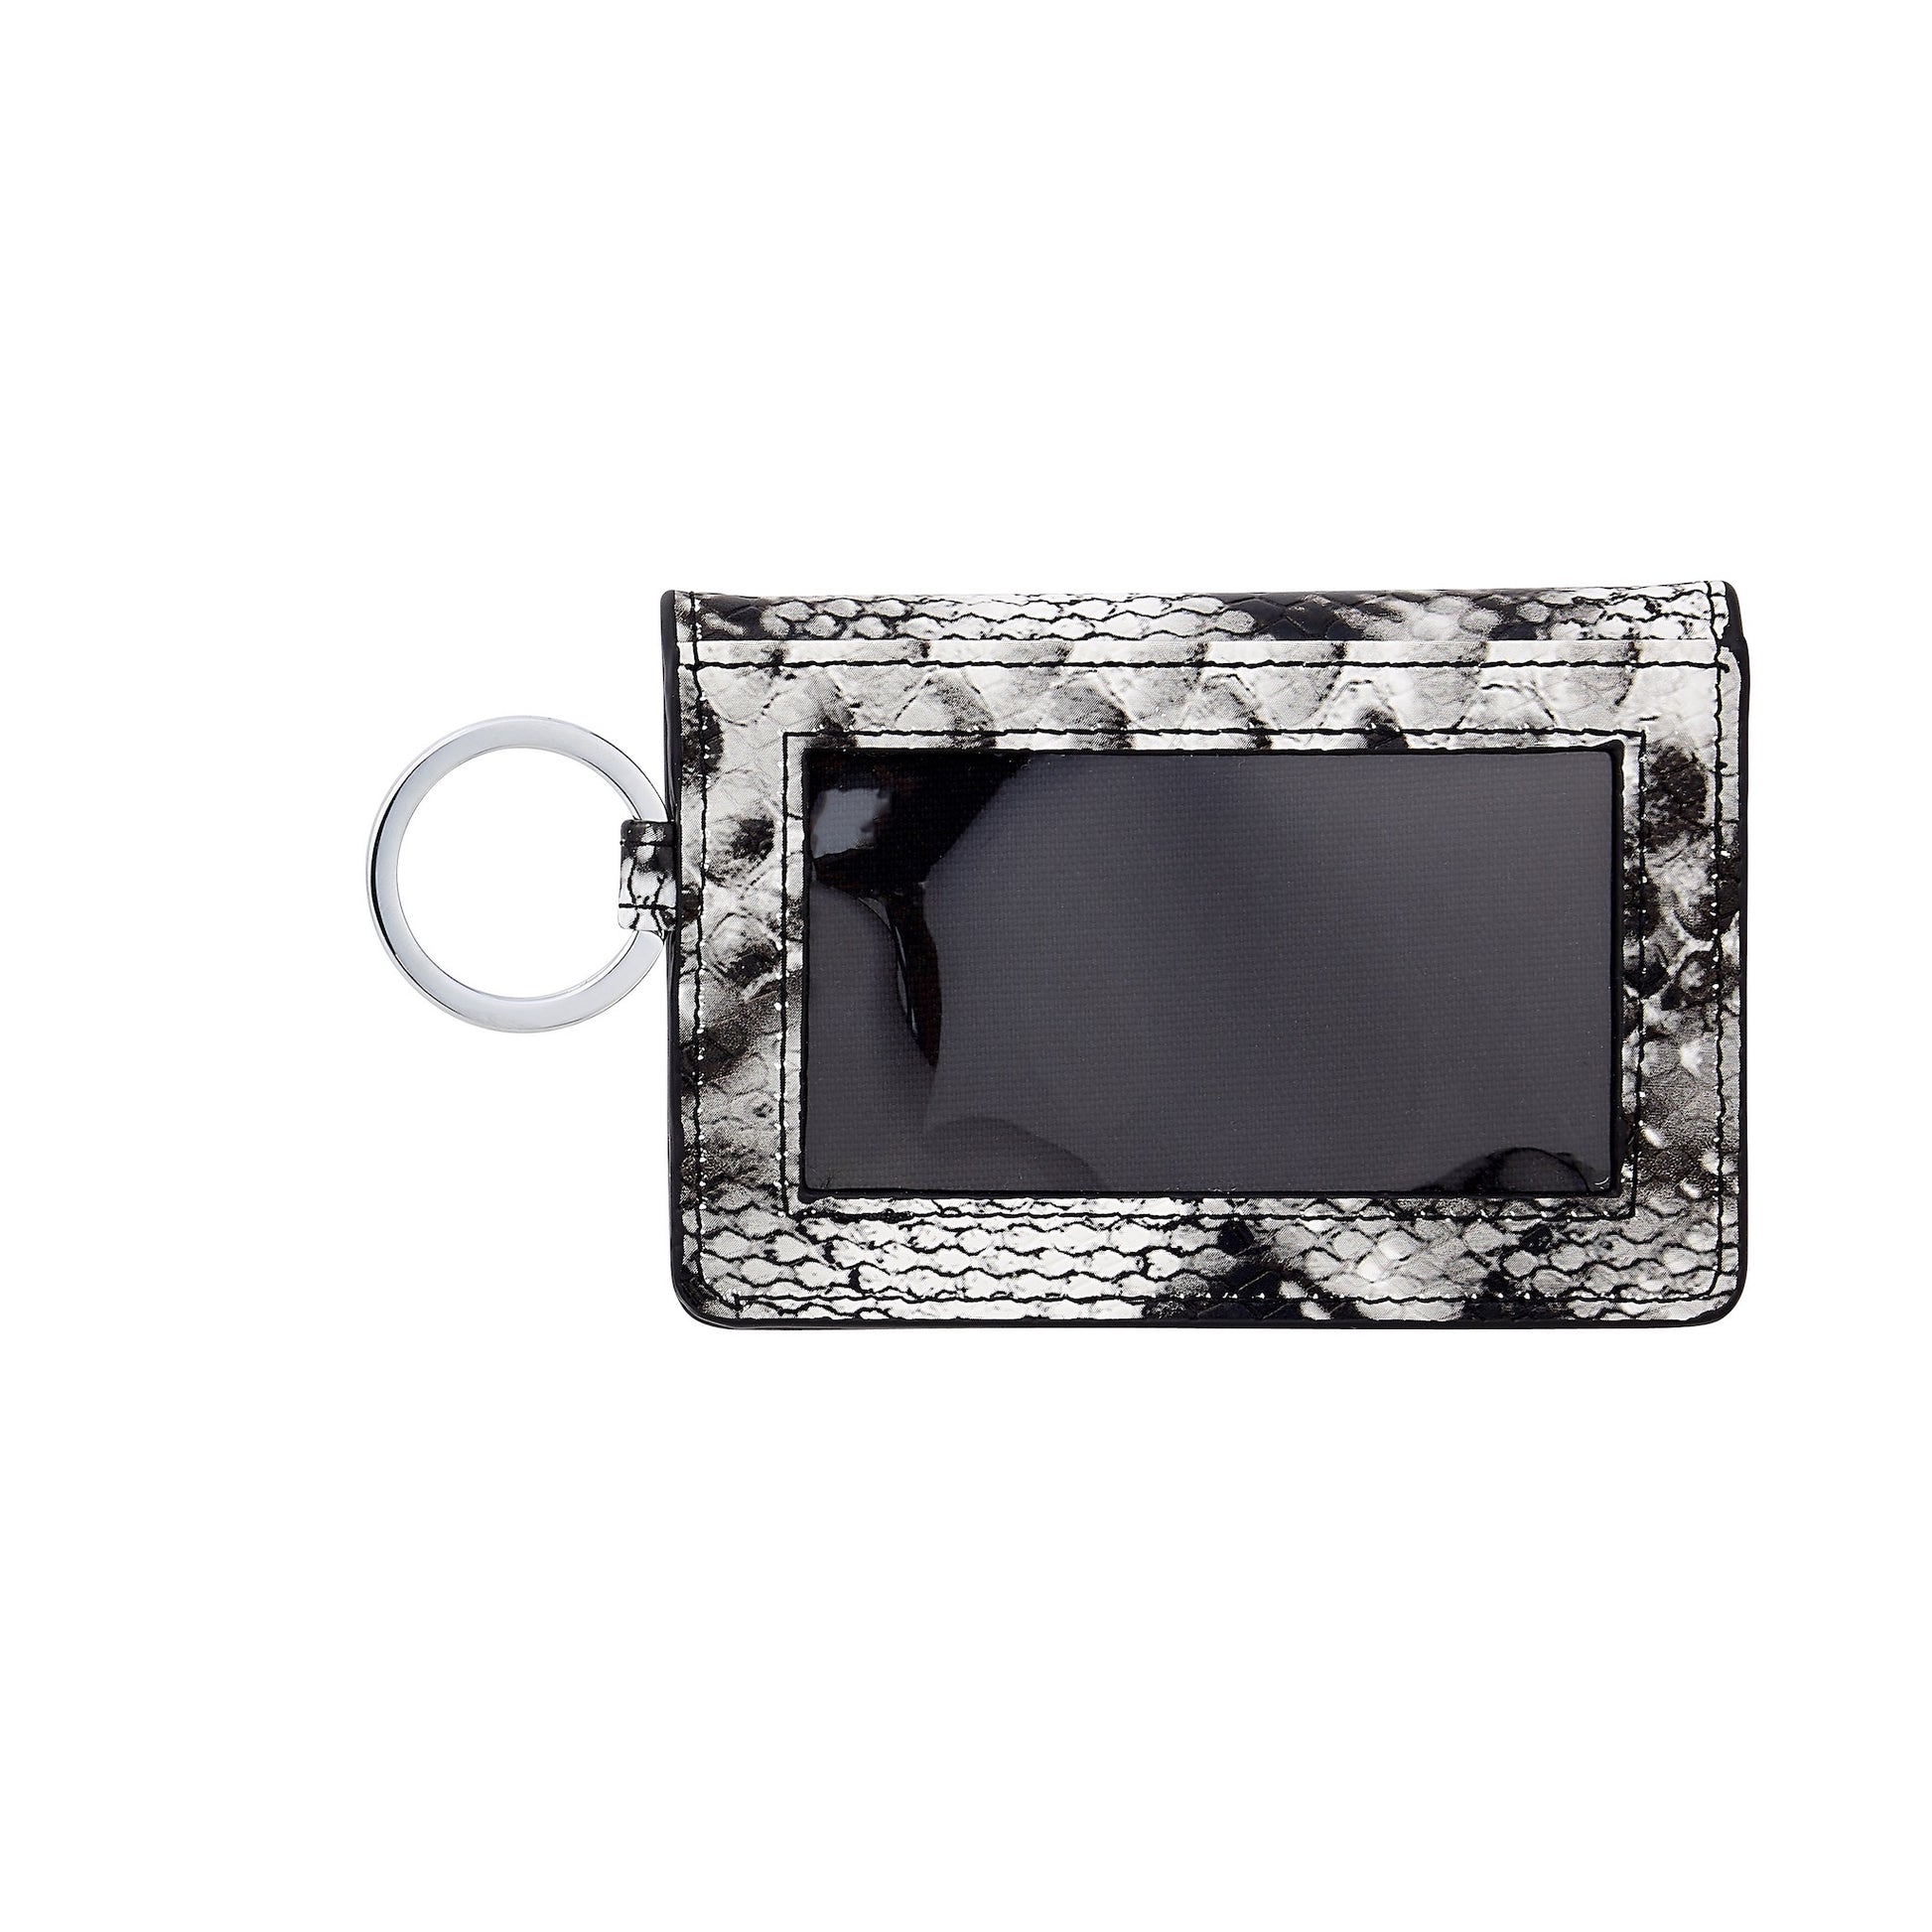 Sleek black & white leather bifold keychain wallet - backside.